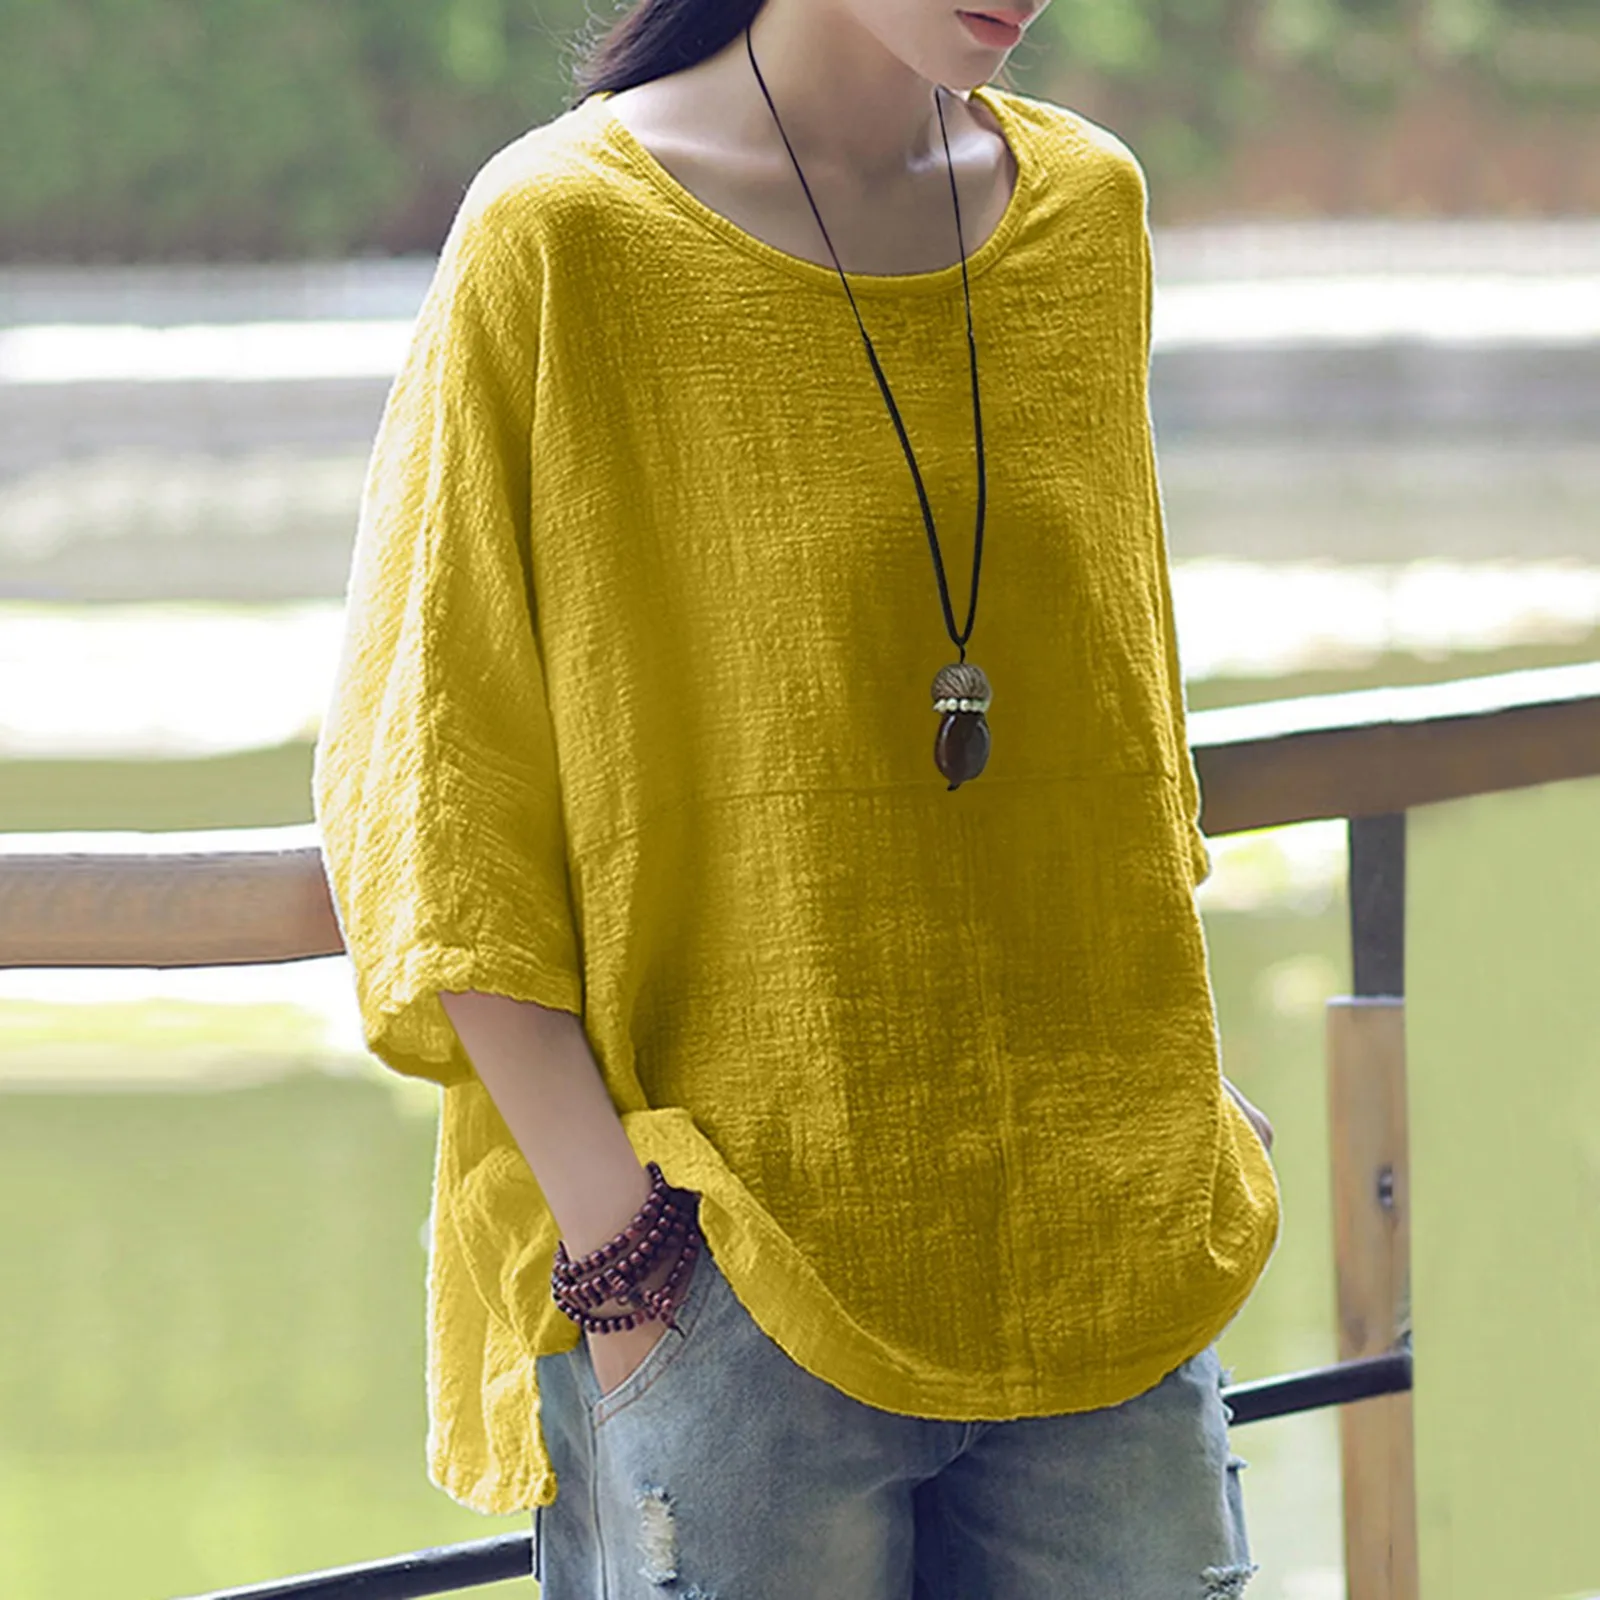 Franterd Women Casual Linen Blouse Solid Plus Size V-Neck Button Tunic Tops T Shirt More Colors 8 Size S-5XL 